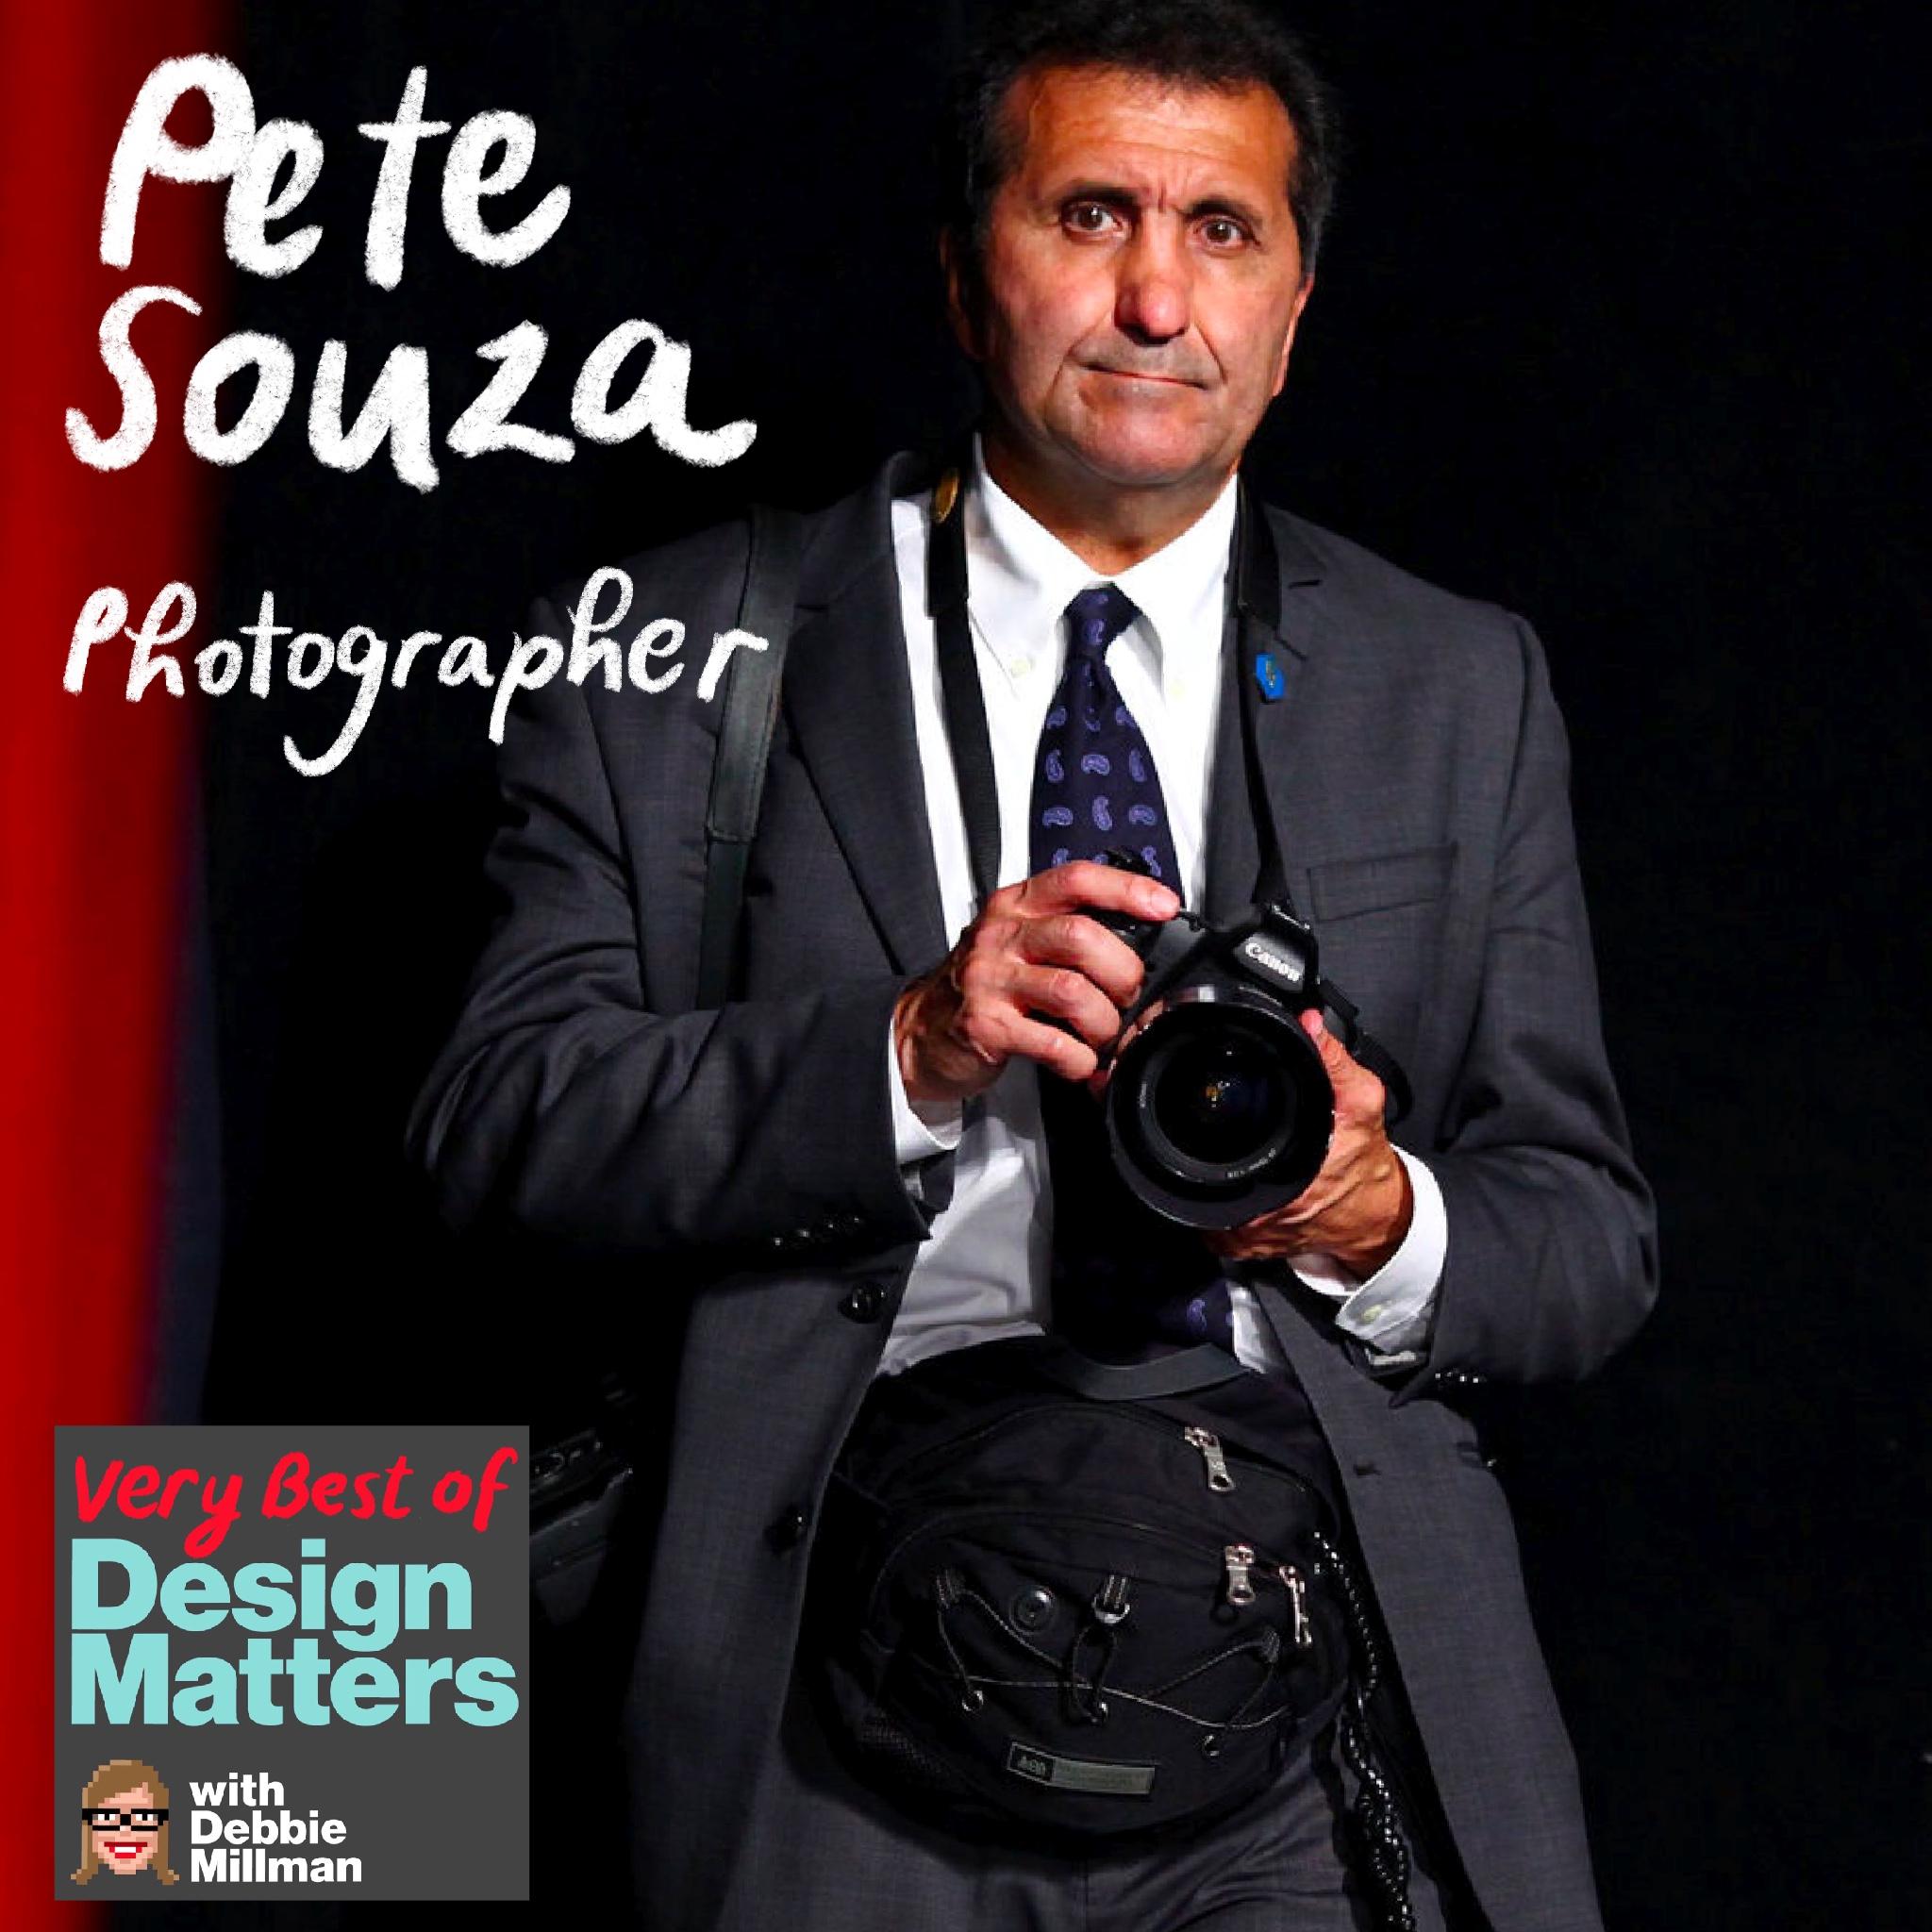 Thumbnail for "Best of Design Matters: Pete Souza".